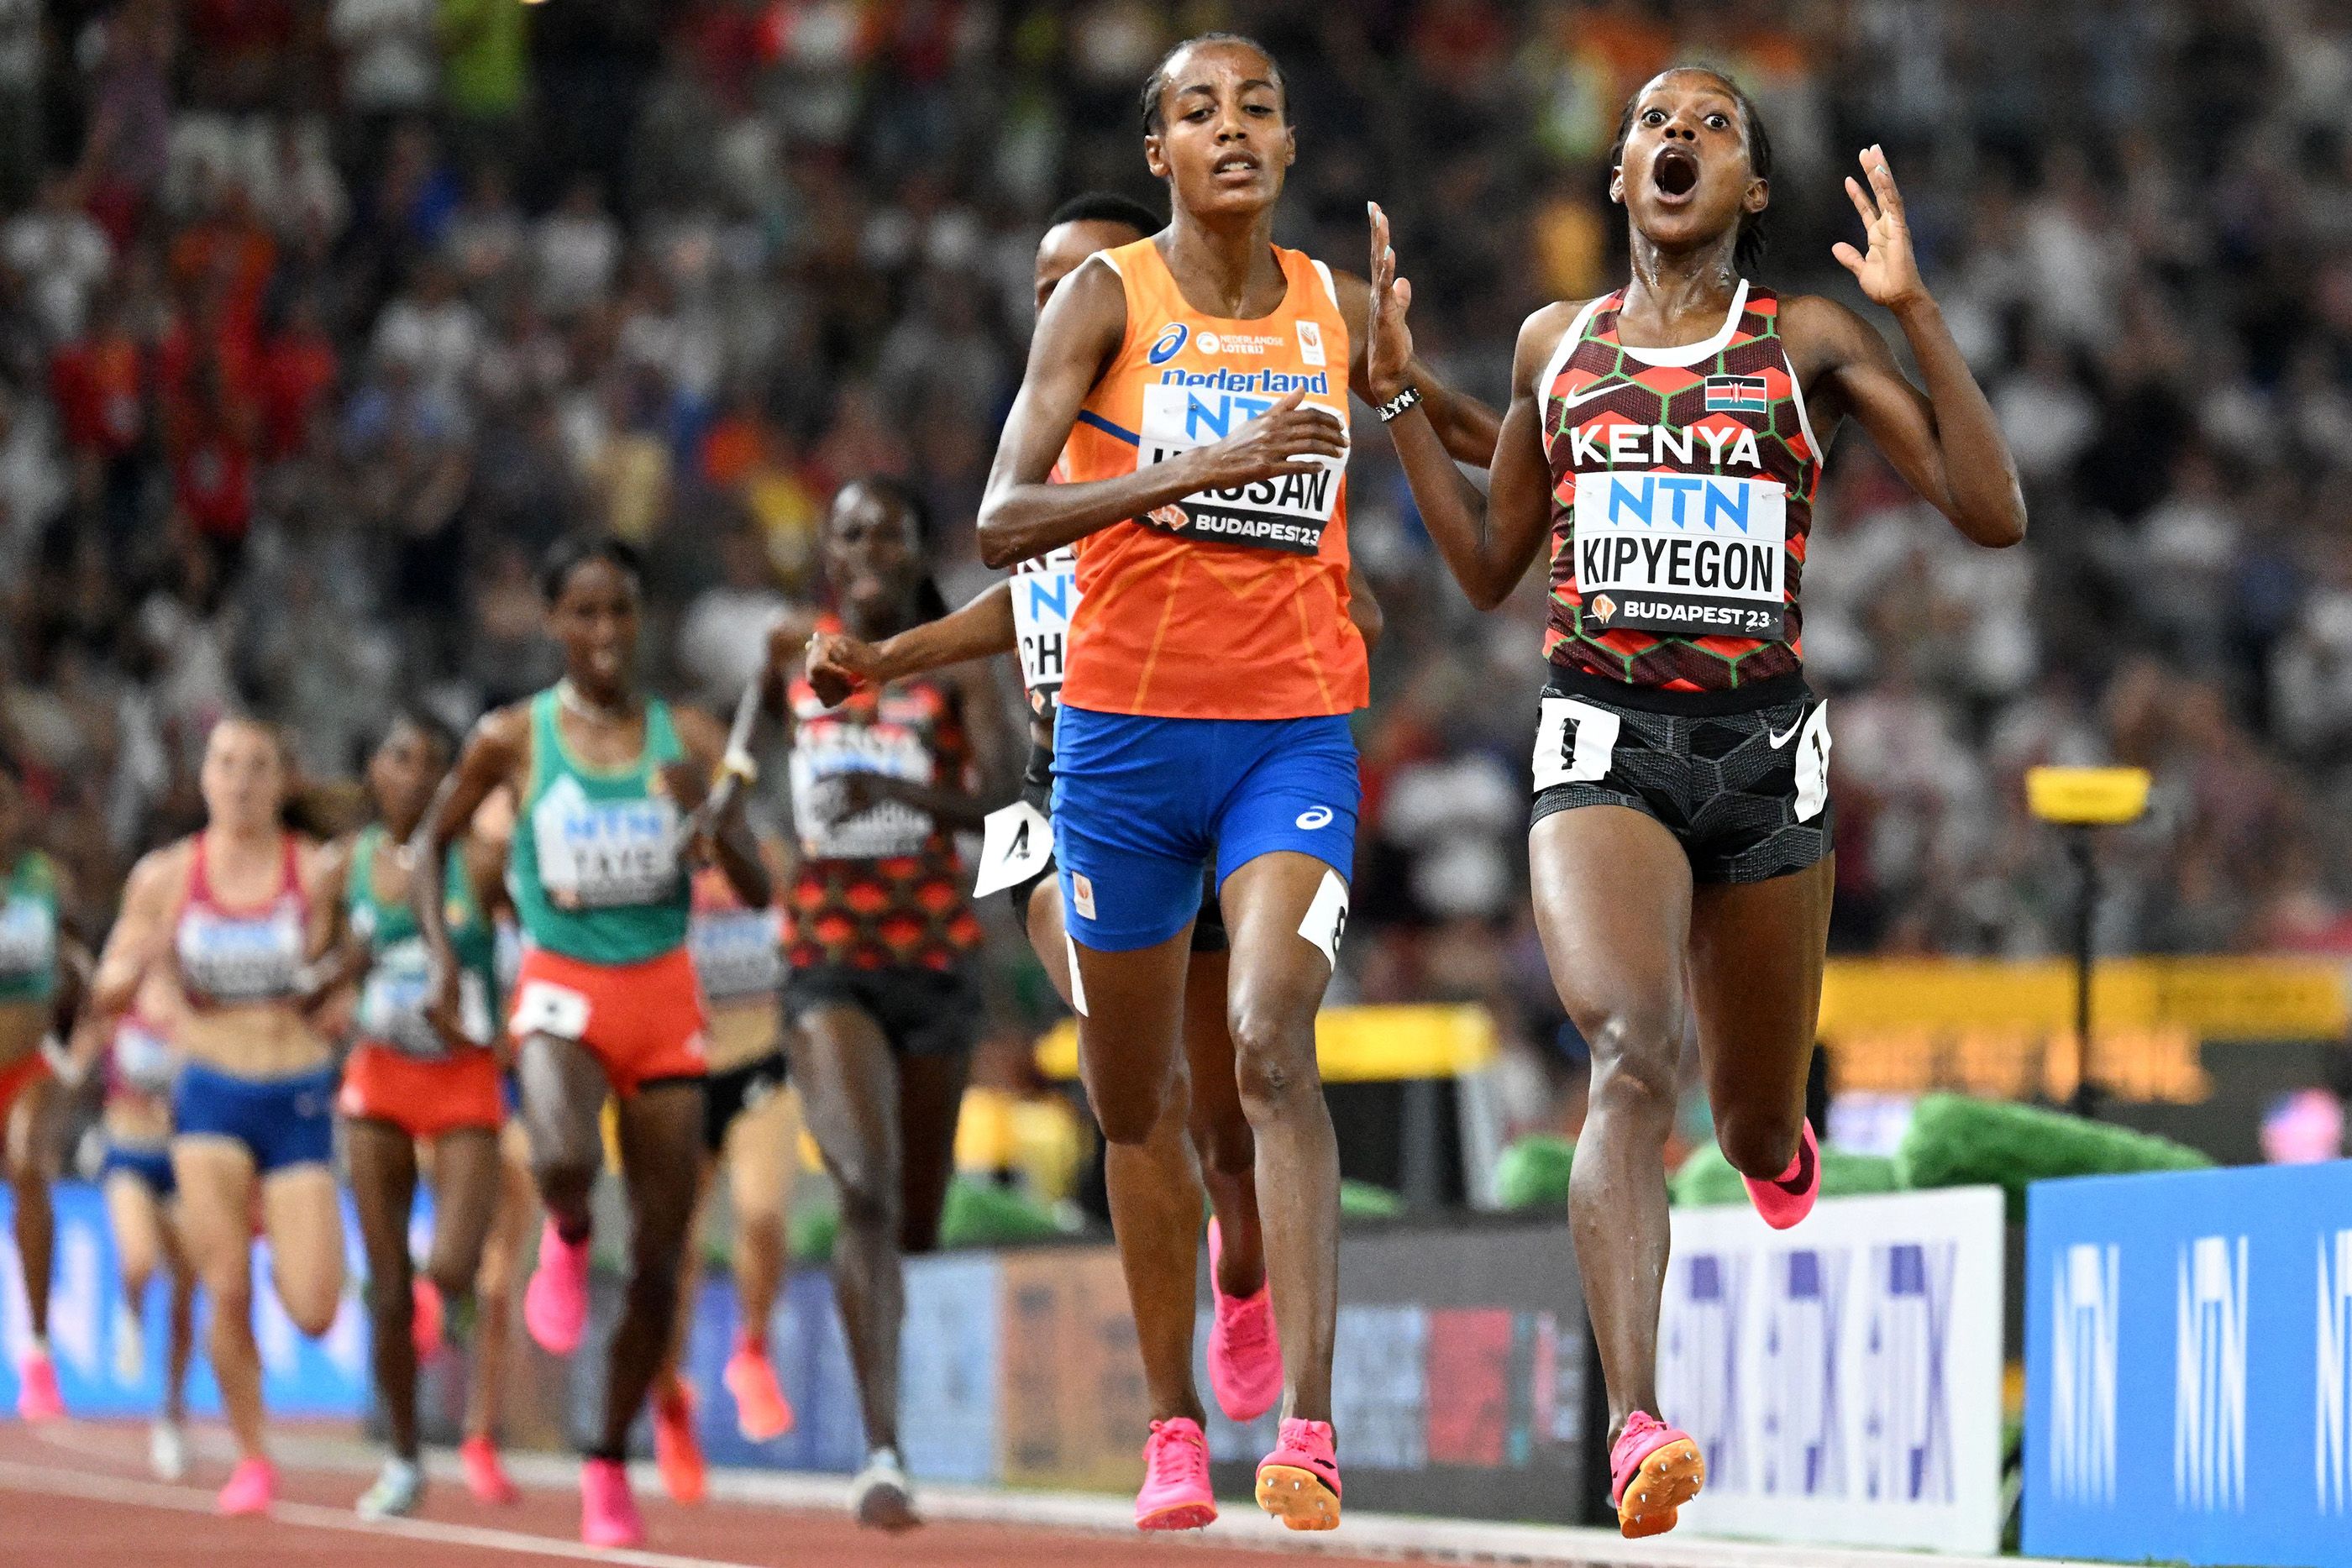 Faith Kipyegon wins the 5000m at the World Athletics Championships Budapest 23